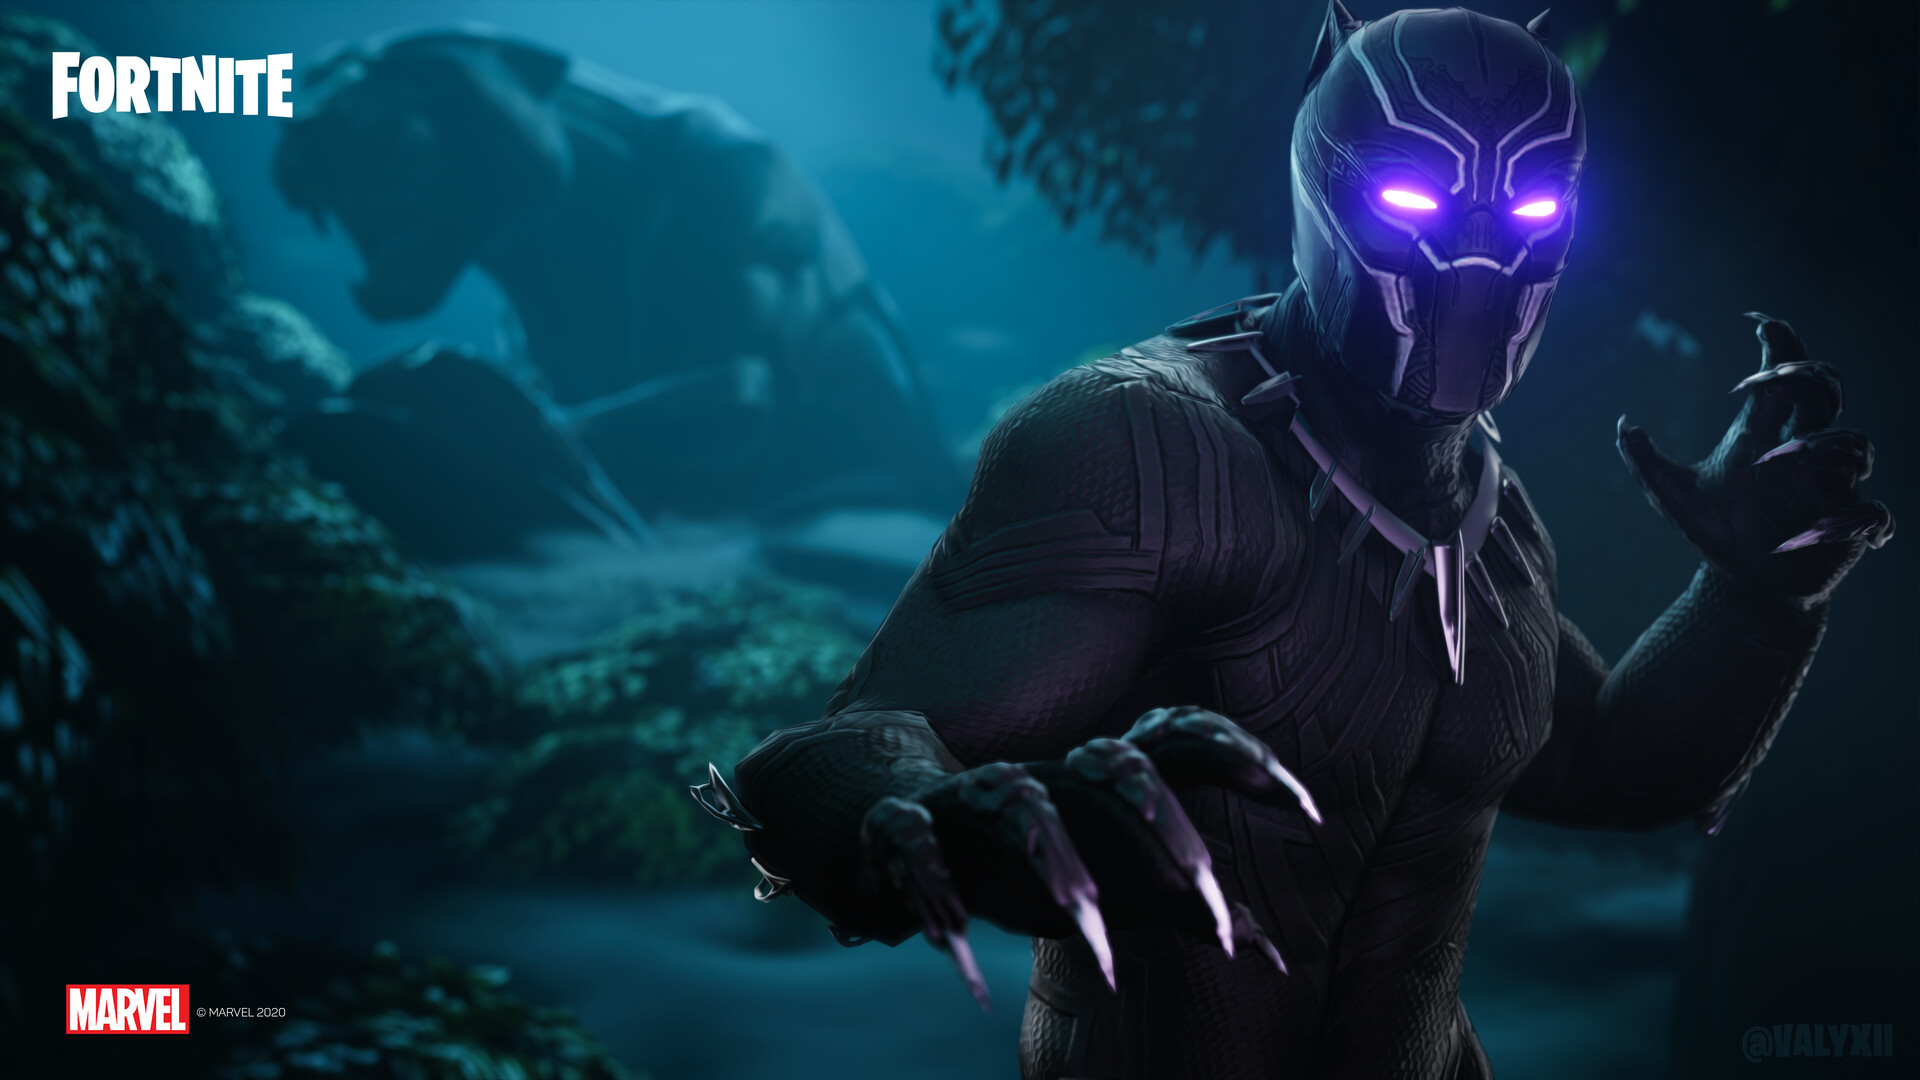 ArtStation - Black Panther Fortnite Loading Screen